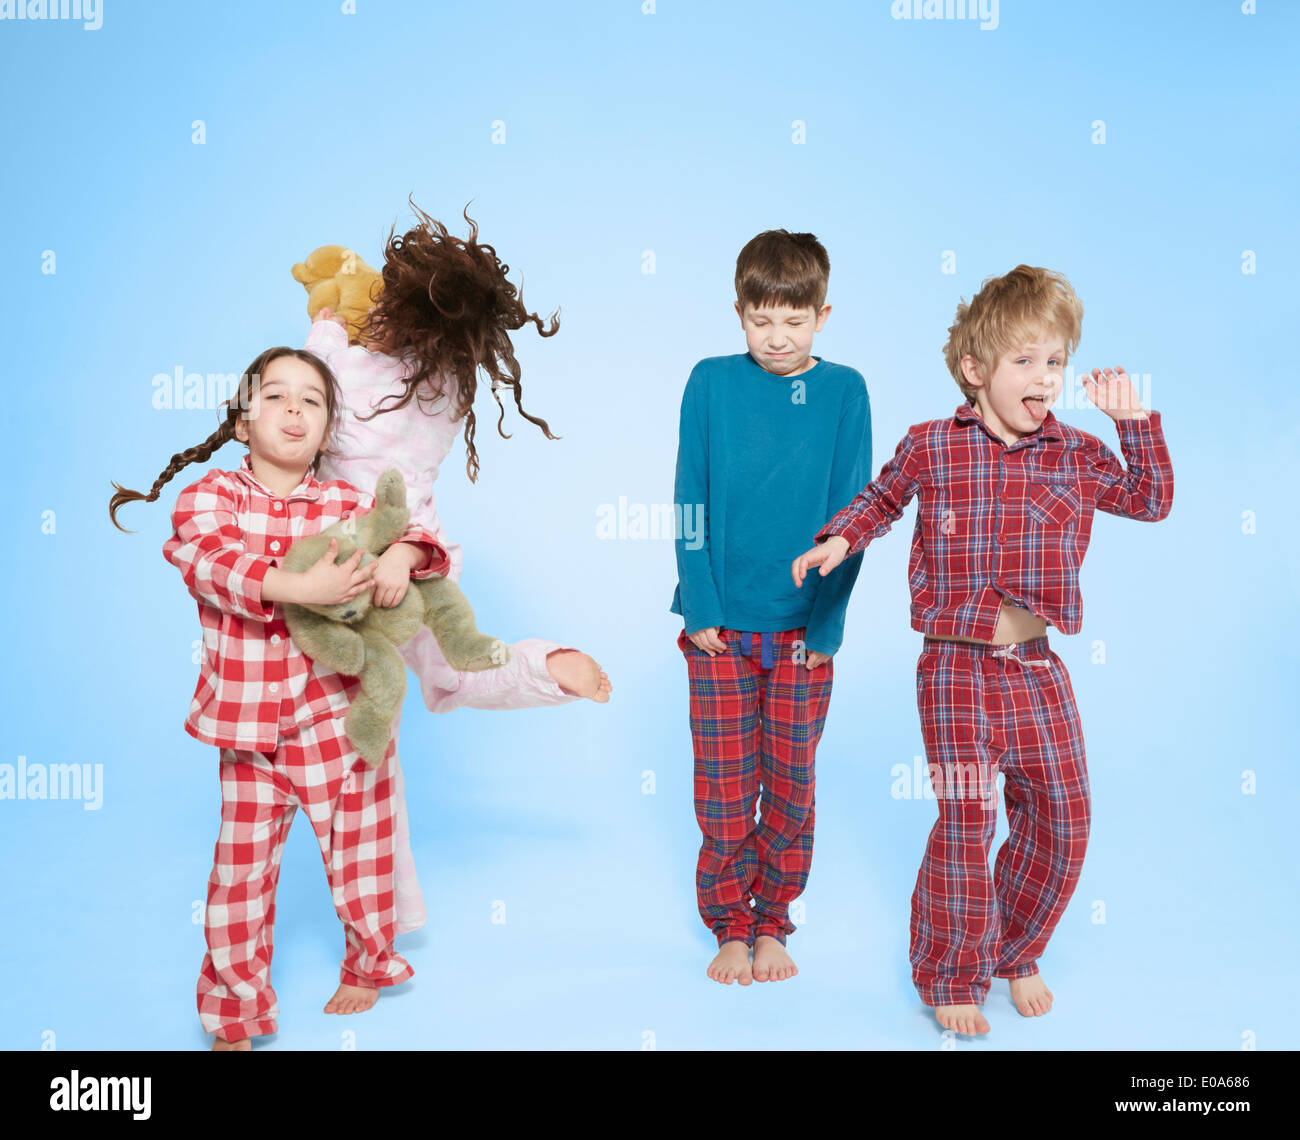 Children in pyjamas dancing and jumping Stock Photo